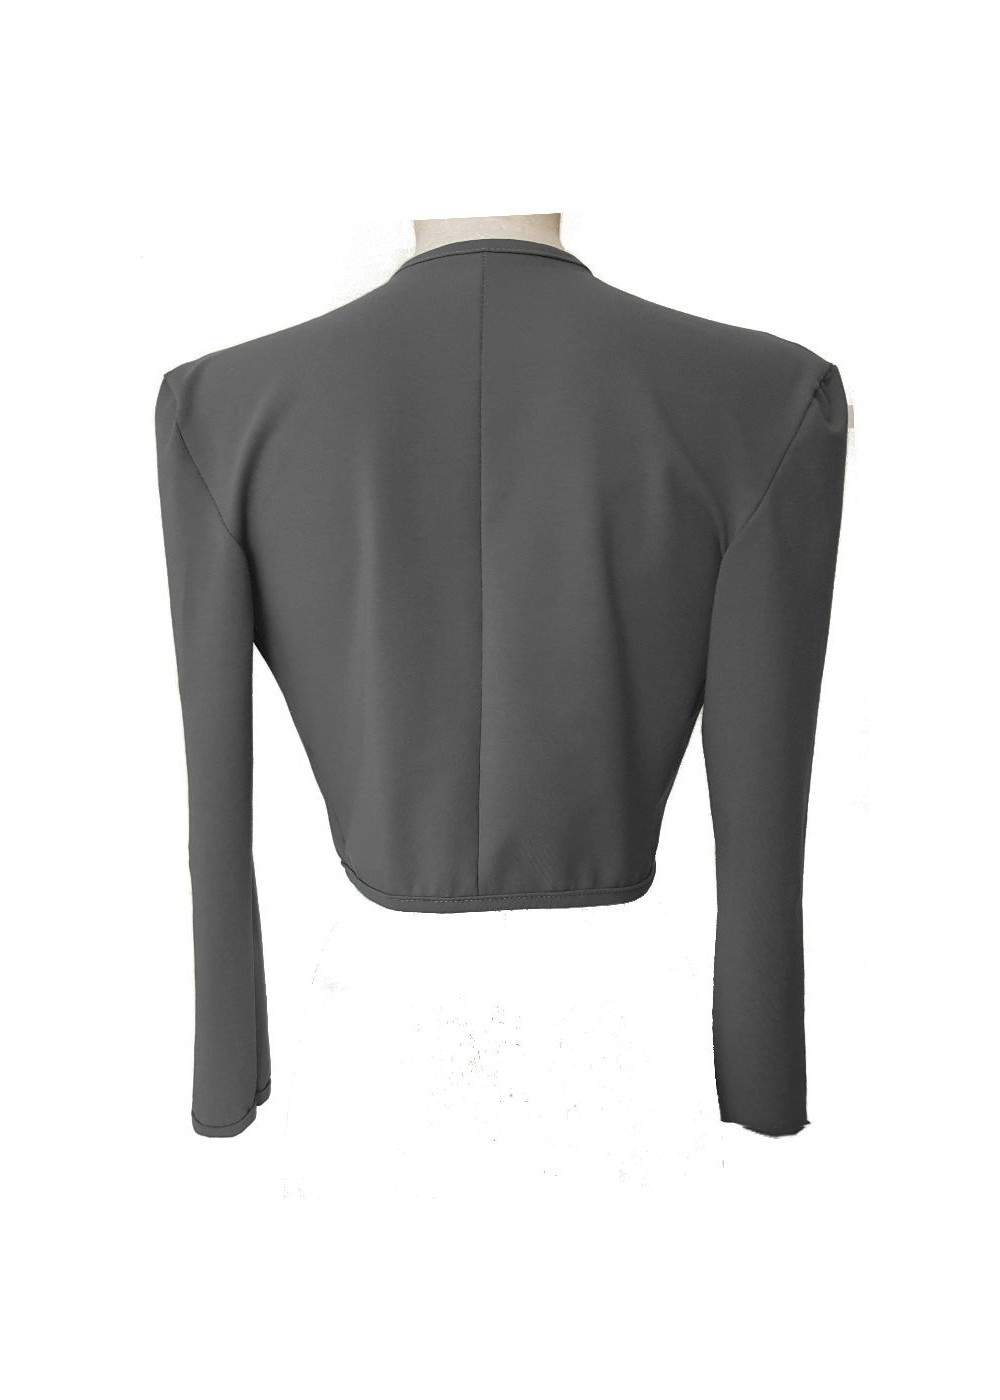 Size 34 - 52 Cotton Stretch Short Jacket Grey Magdeburg Production ... - Deutsche Produktion